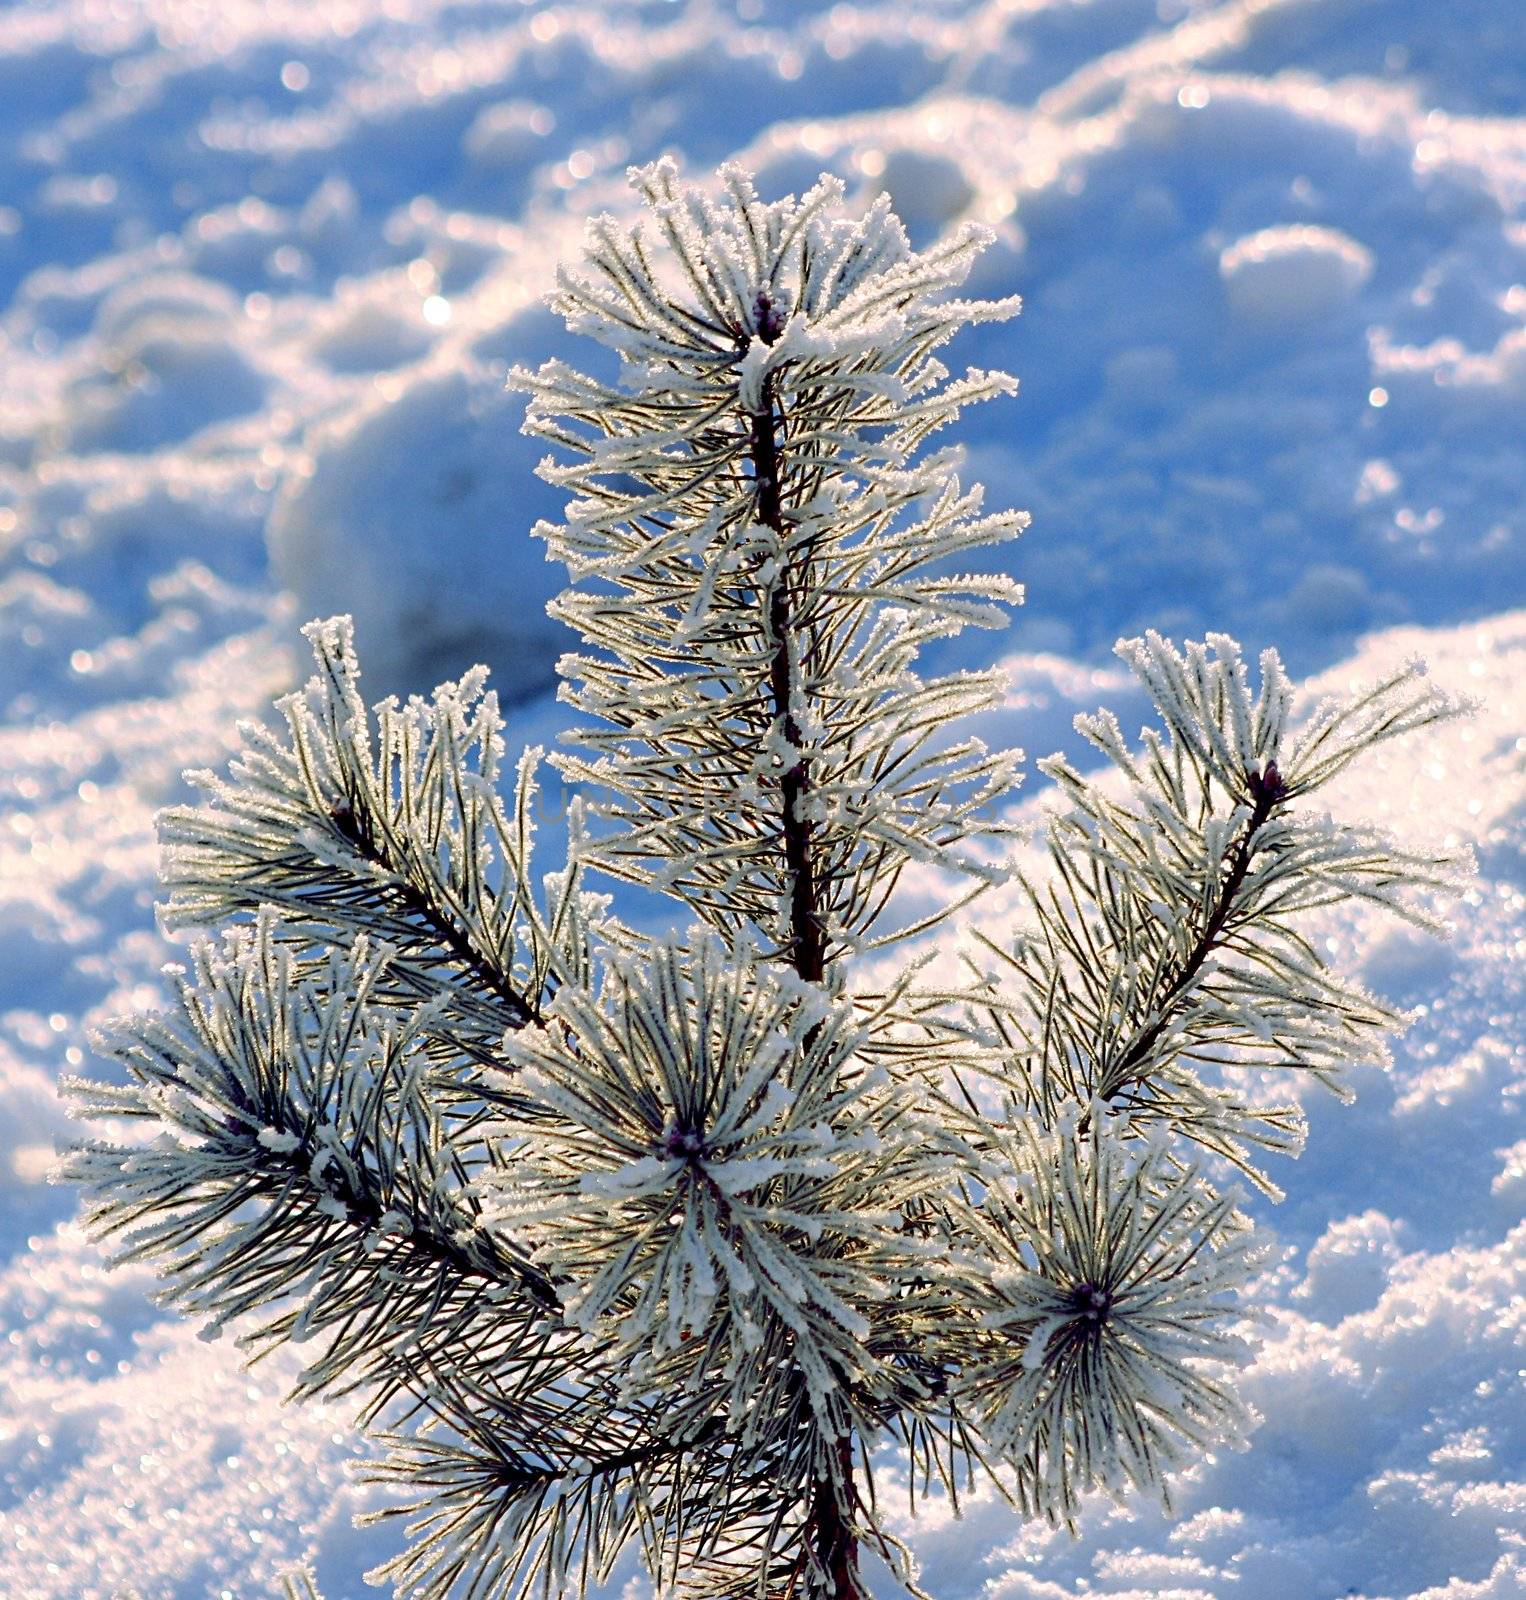 Winter pine top #1 by sundaune